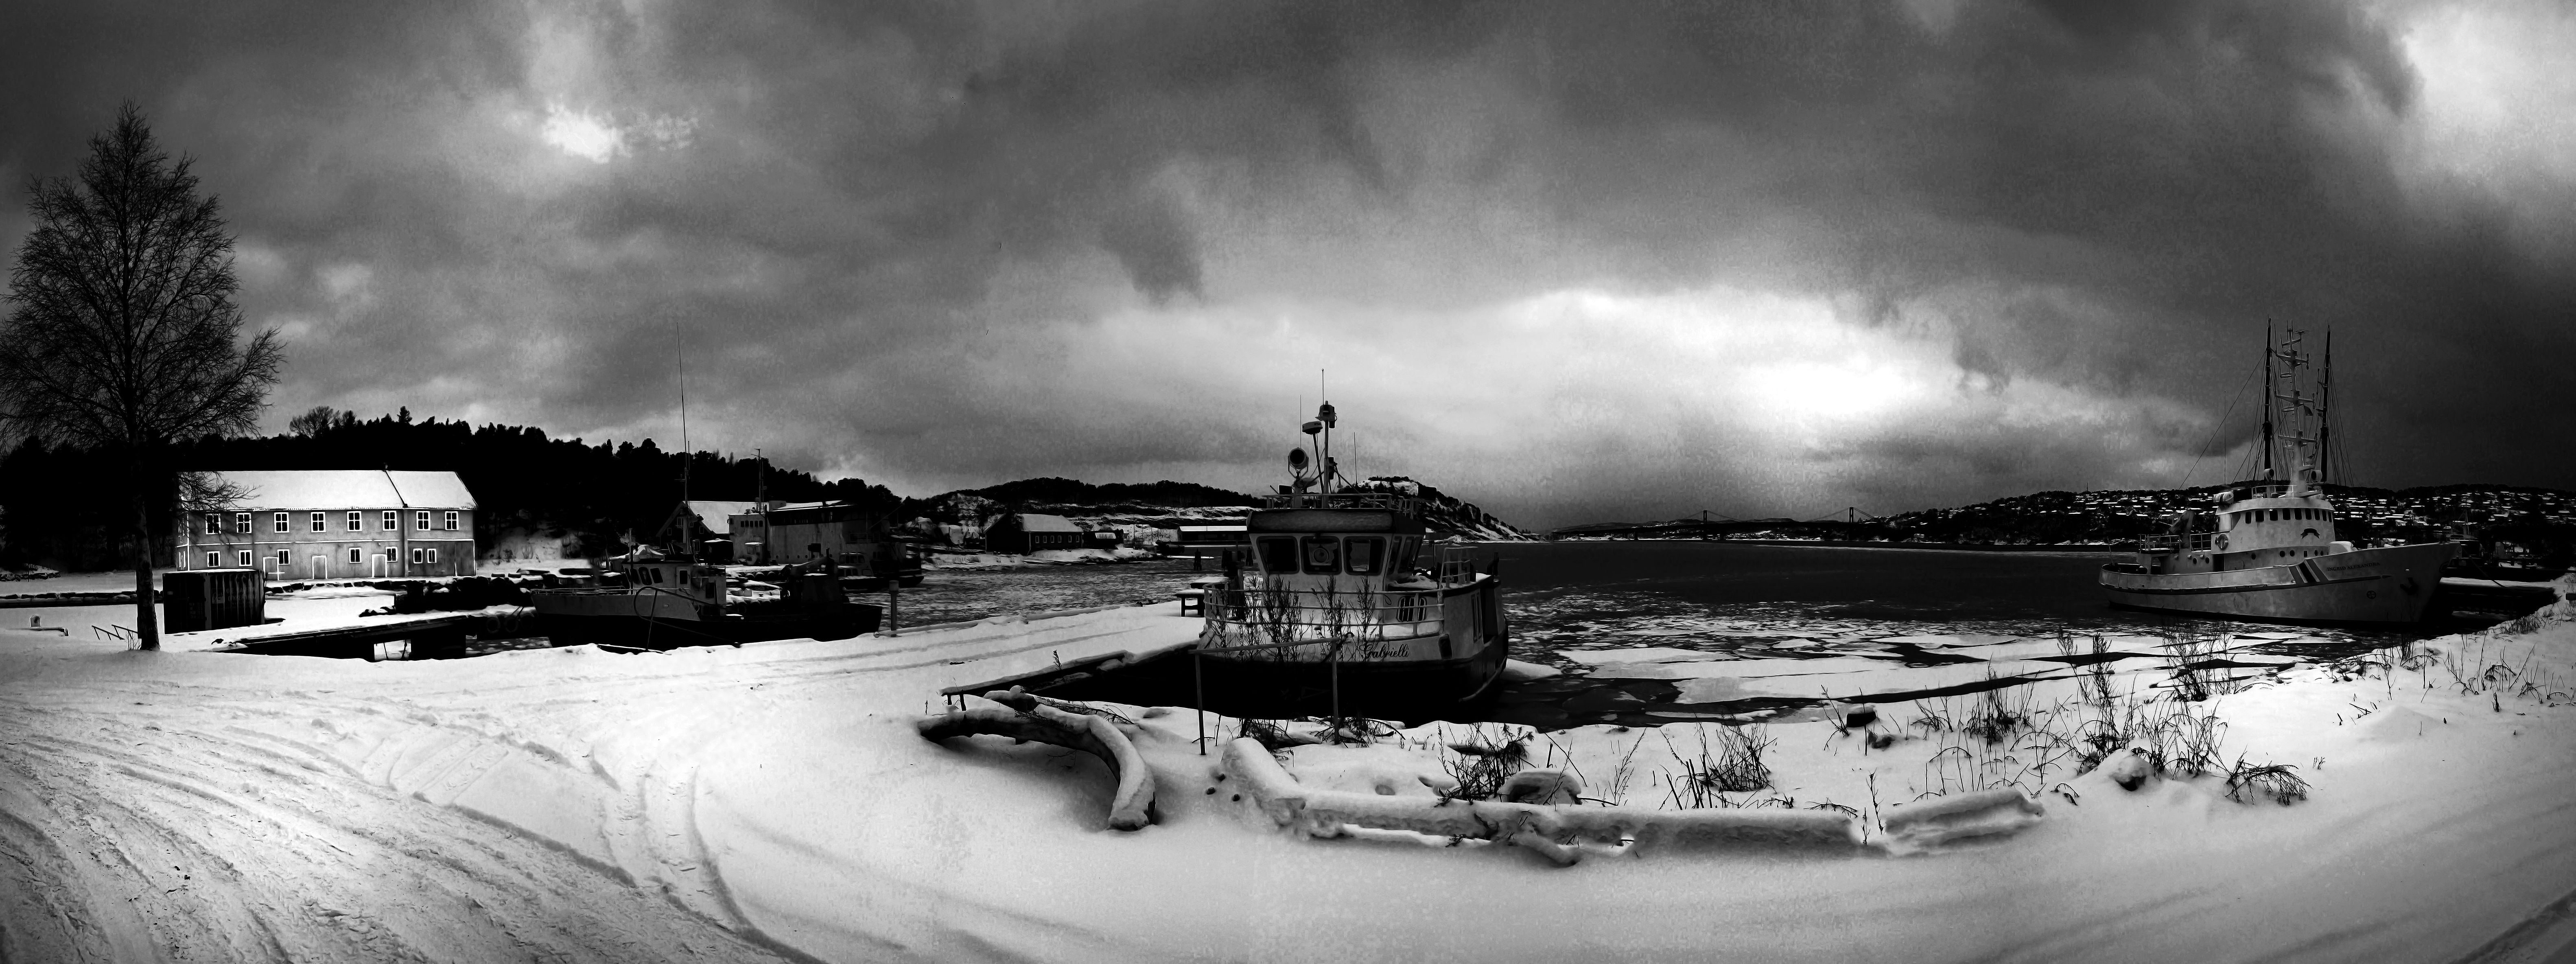 Panorama, marvika orlogsstasjon, Agder, Norway, Waterfront, Visitsorlandet, HQ Photo